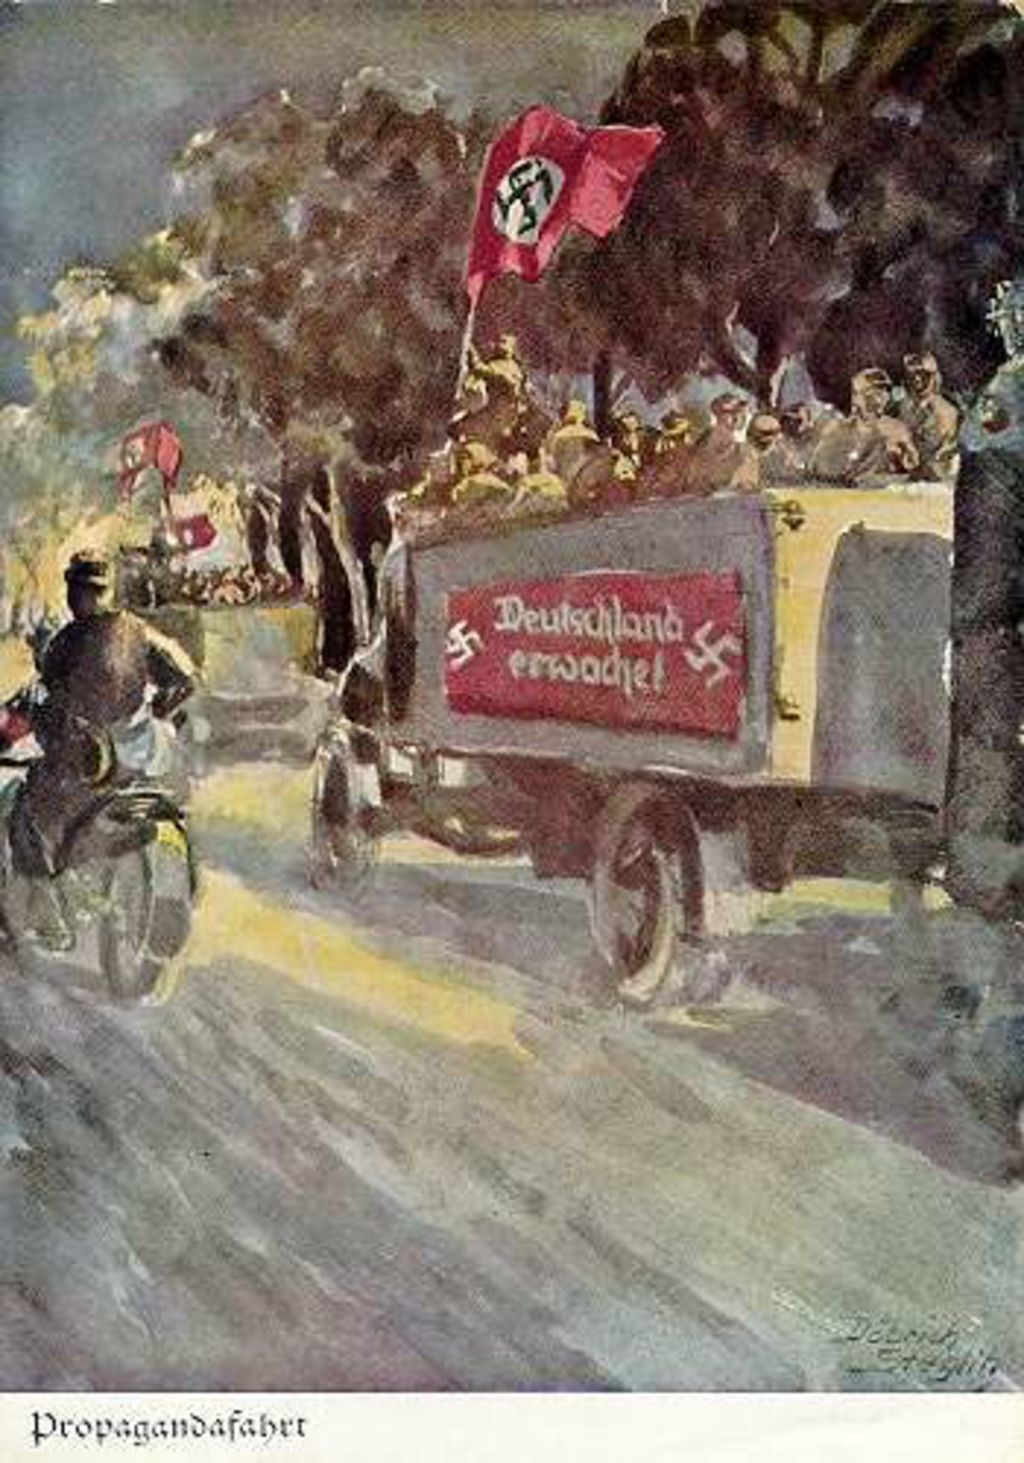 Postkarte: Propagandapostkarte der SA, um 1933